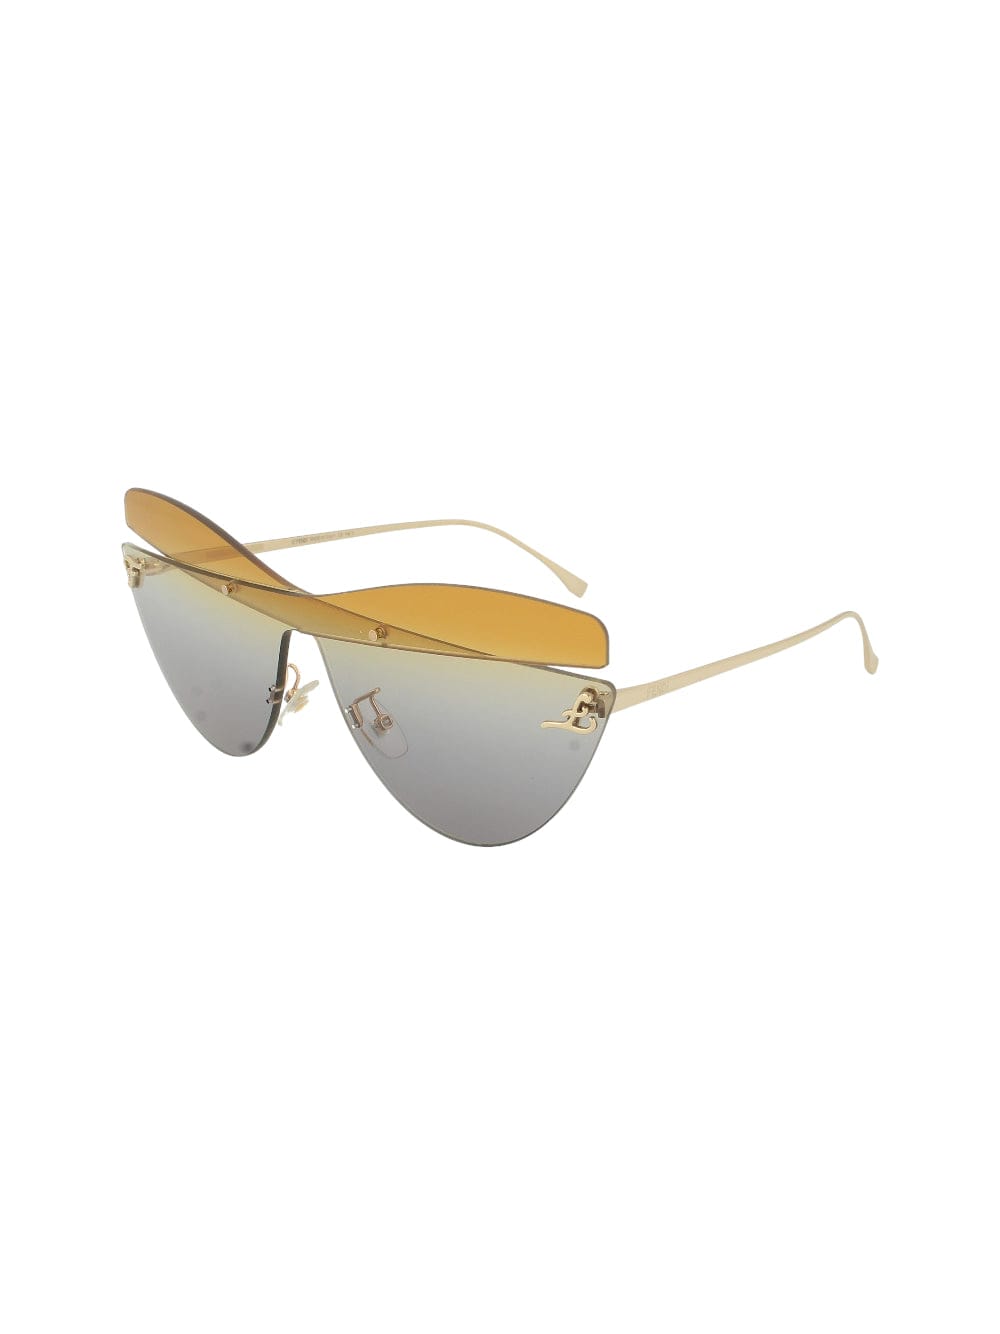 Fendi Eyewear Ff 0400 - Gold Sunglasses